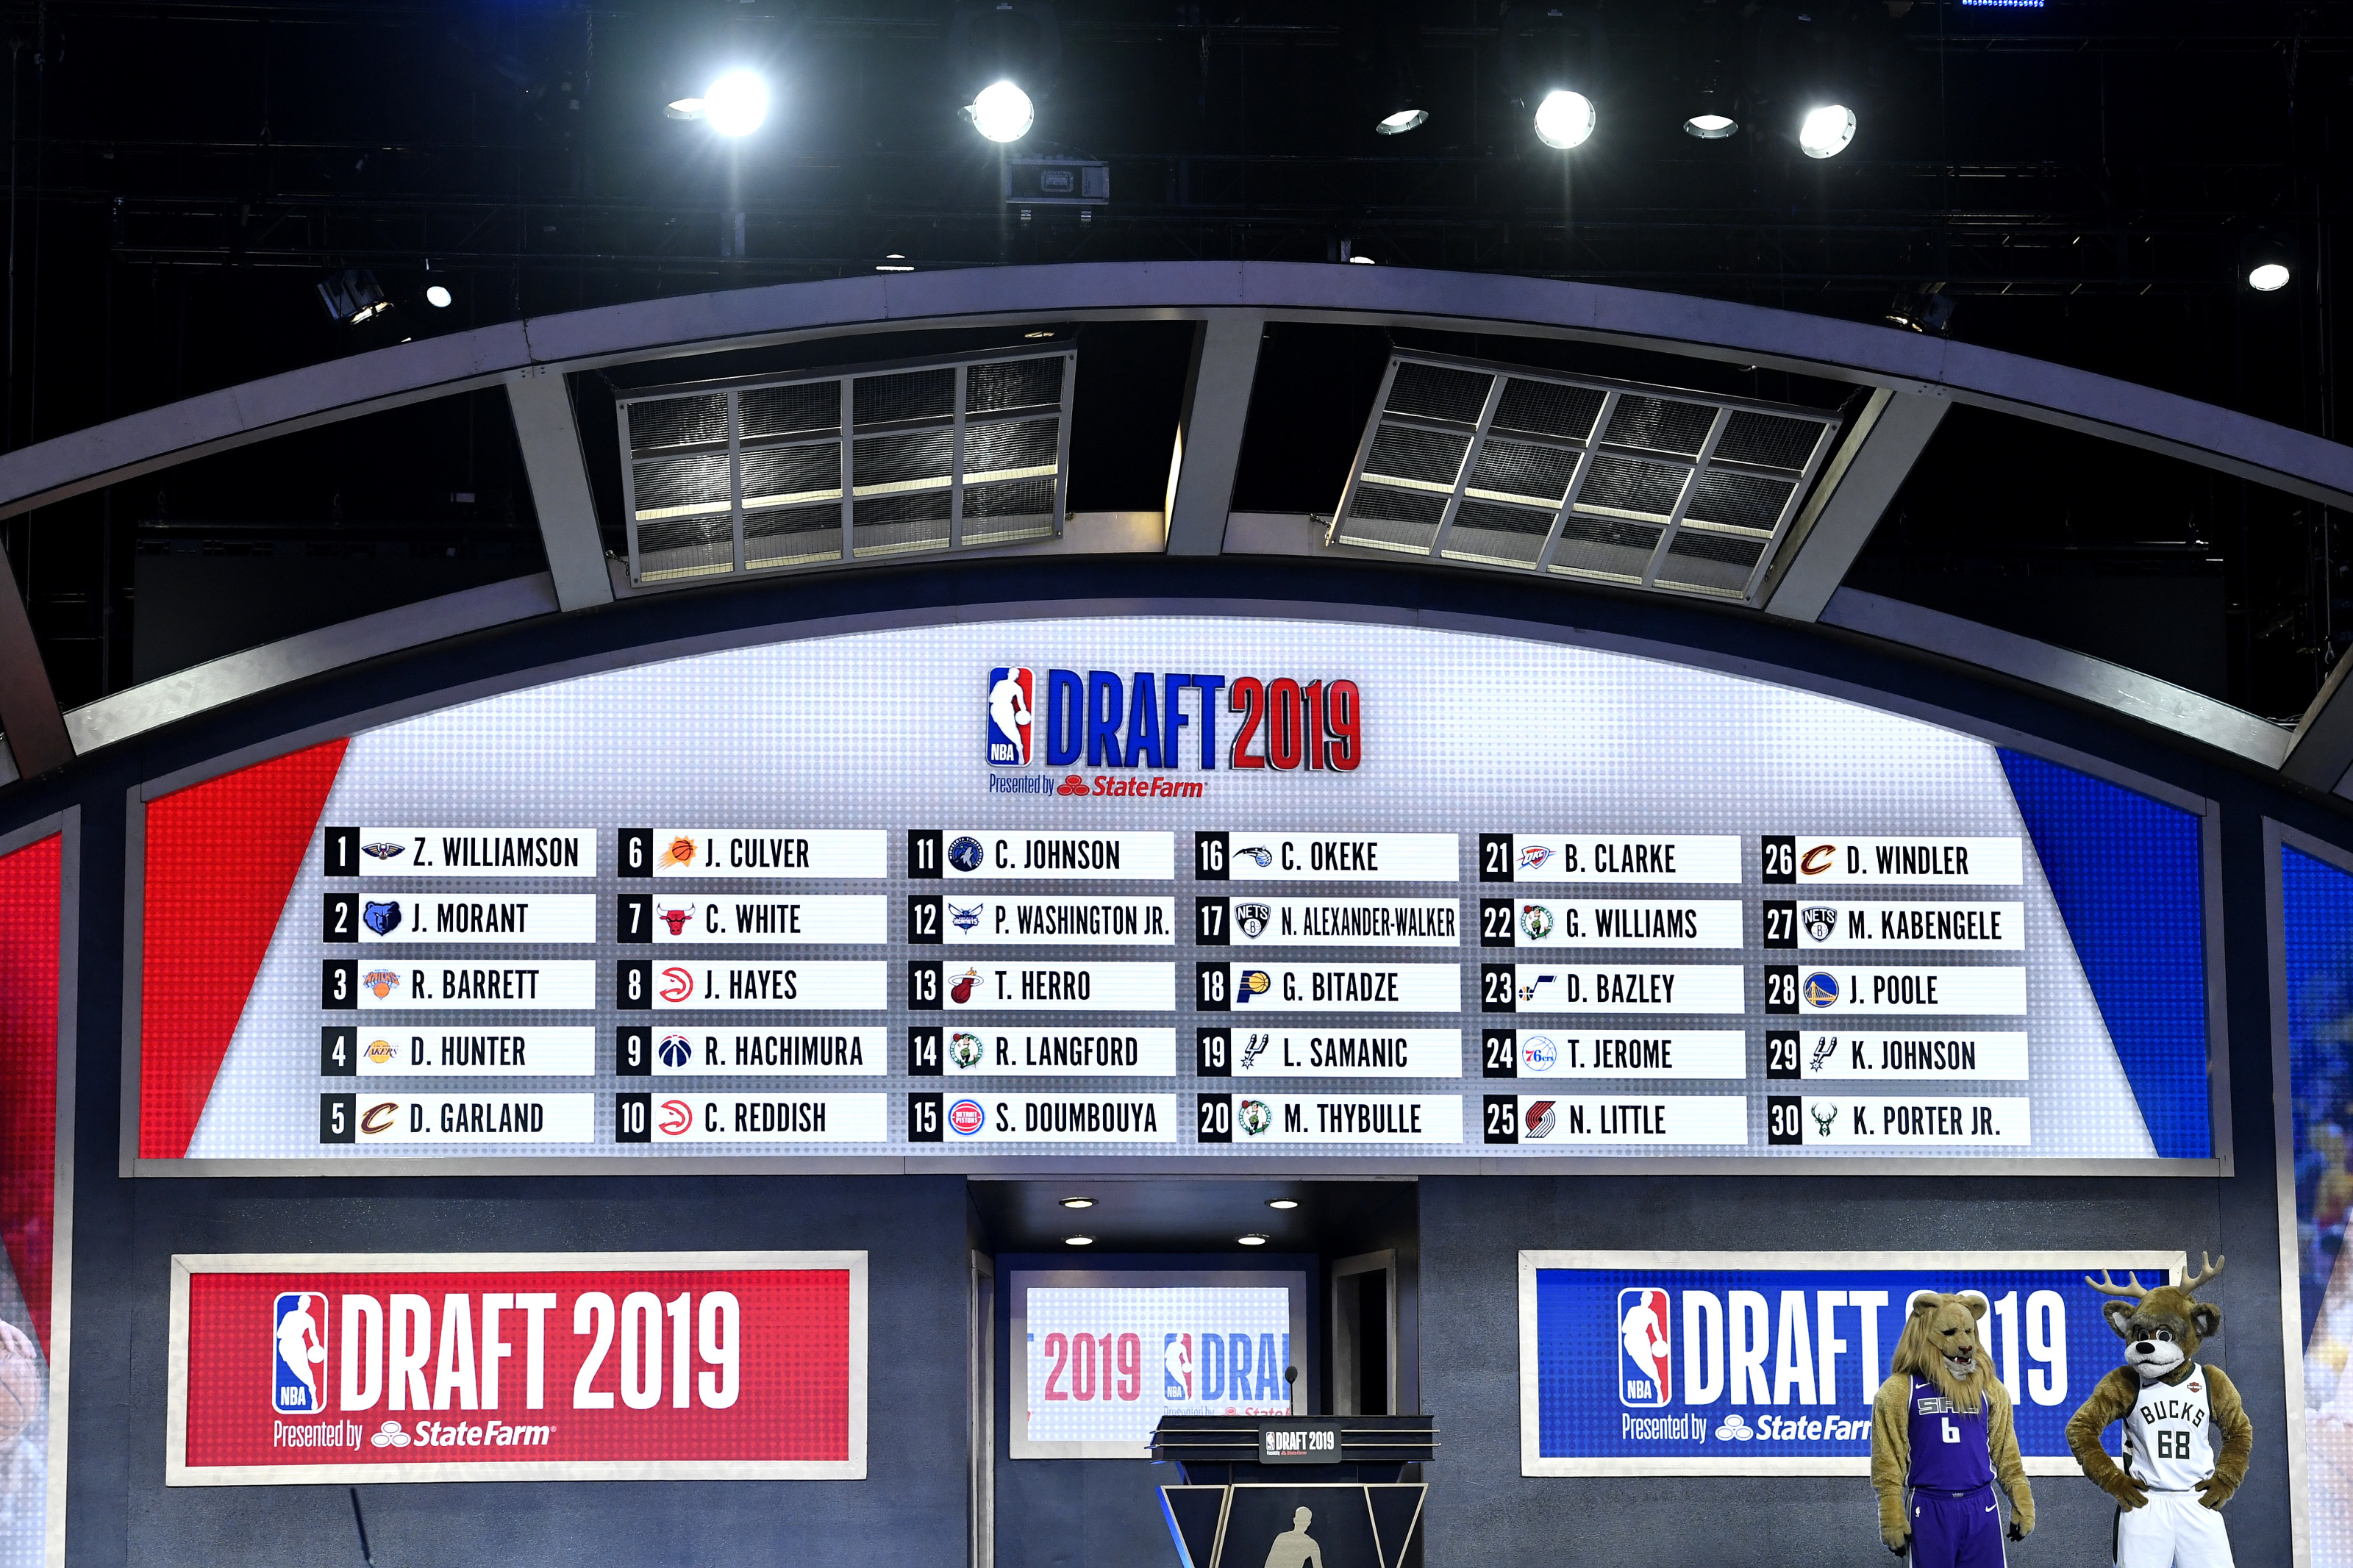 Miami Heat NBA Draft picks: Which future picks do they own? - Page 2